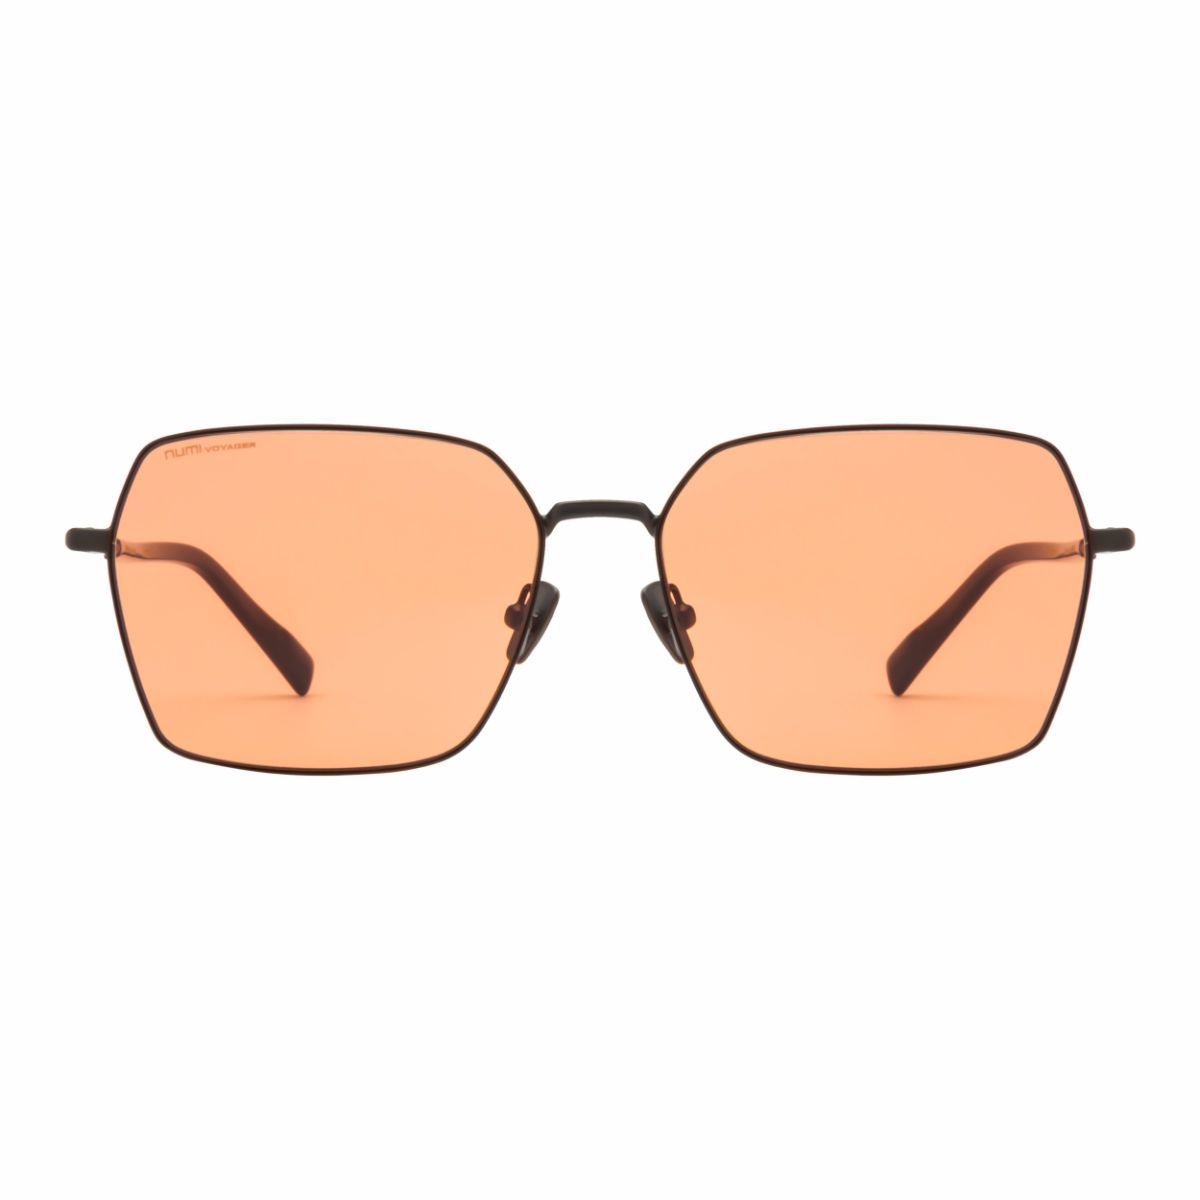 Orange Square Retro Frame Sunglasses - ShopperBoard